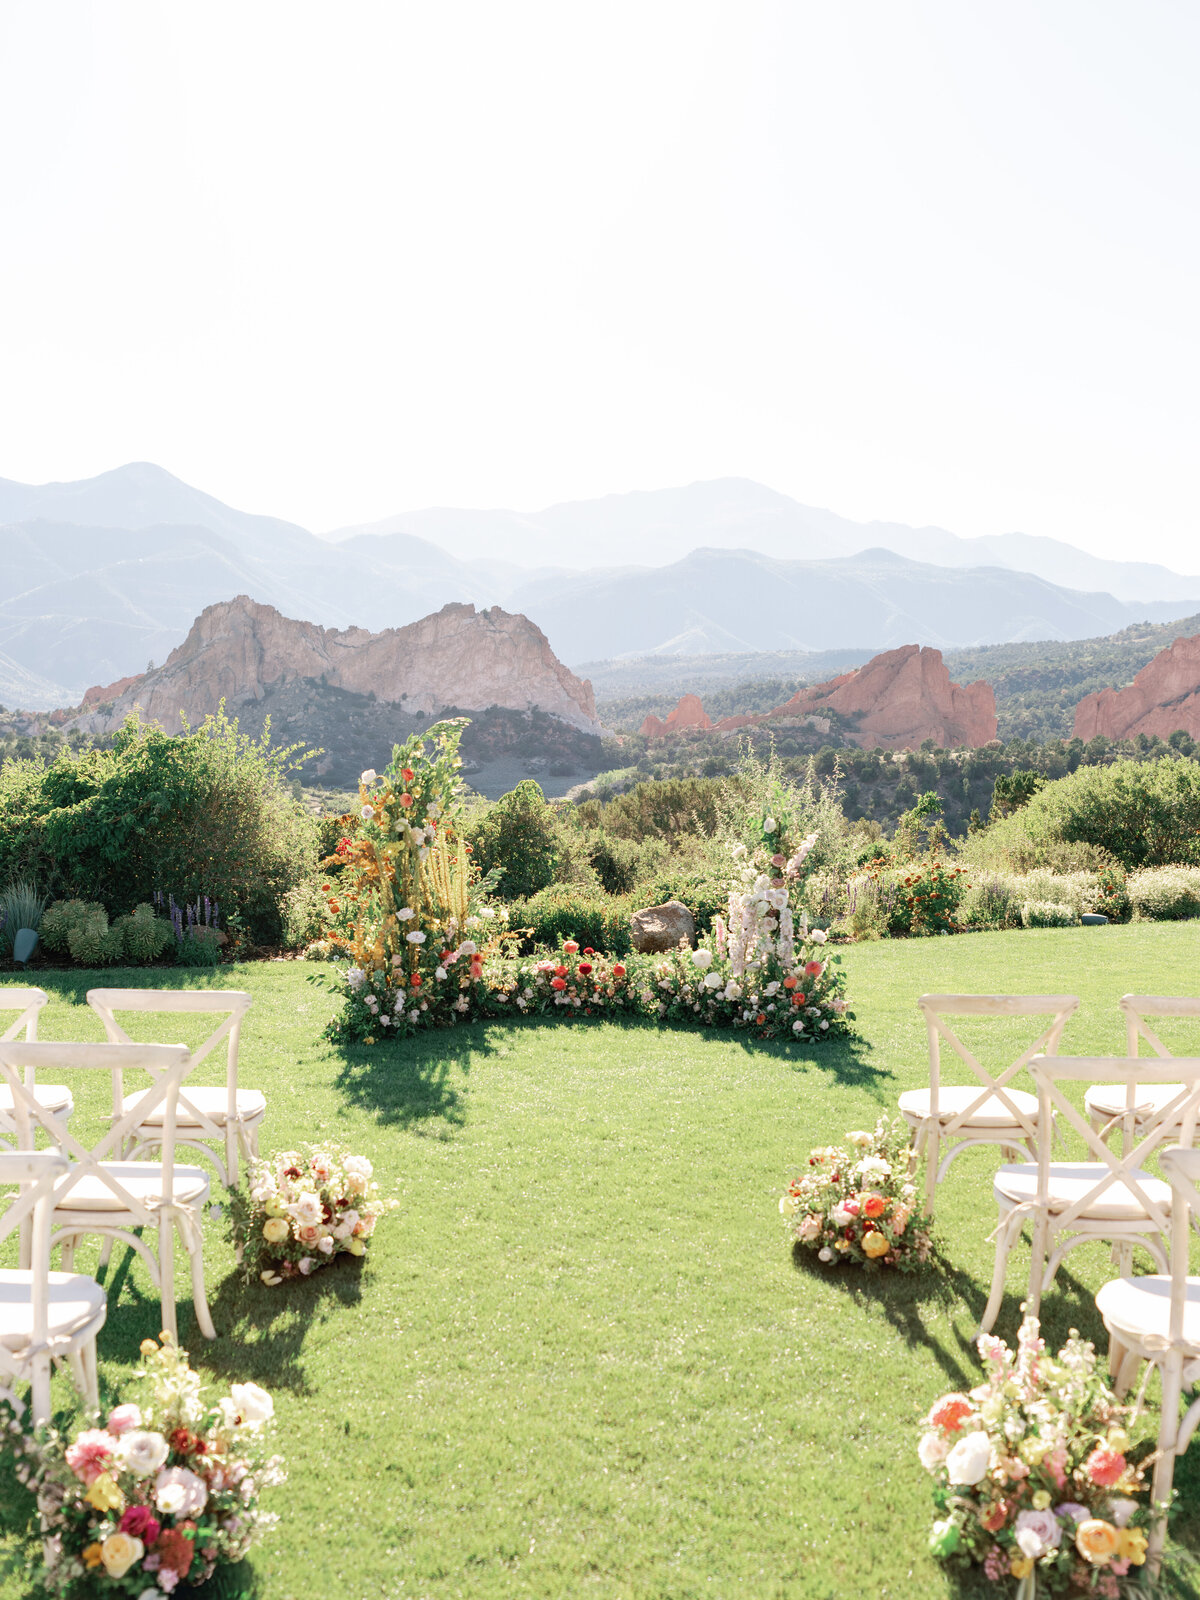 Carlos-Hernandez-Photography-Young-and-Michael-Wedding-Garden-of-the-Gods-Resort-Colorado-Springs-0351-Edit